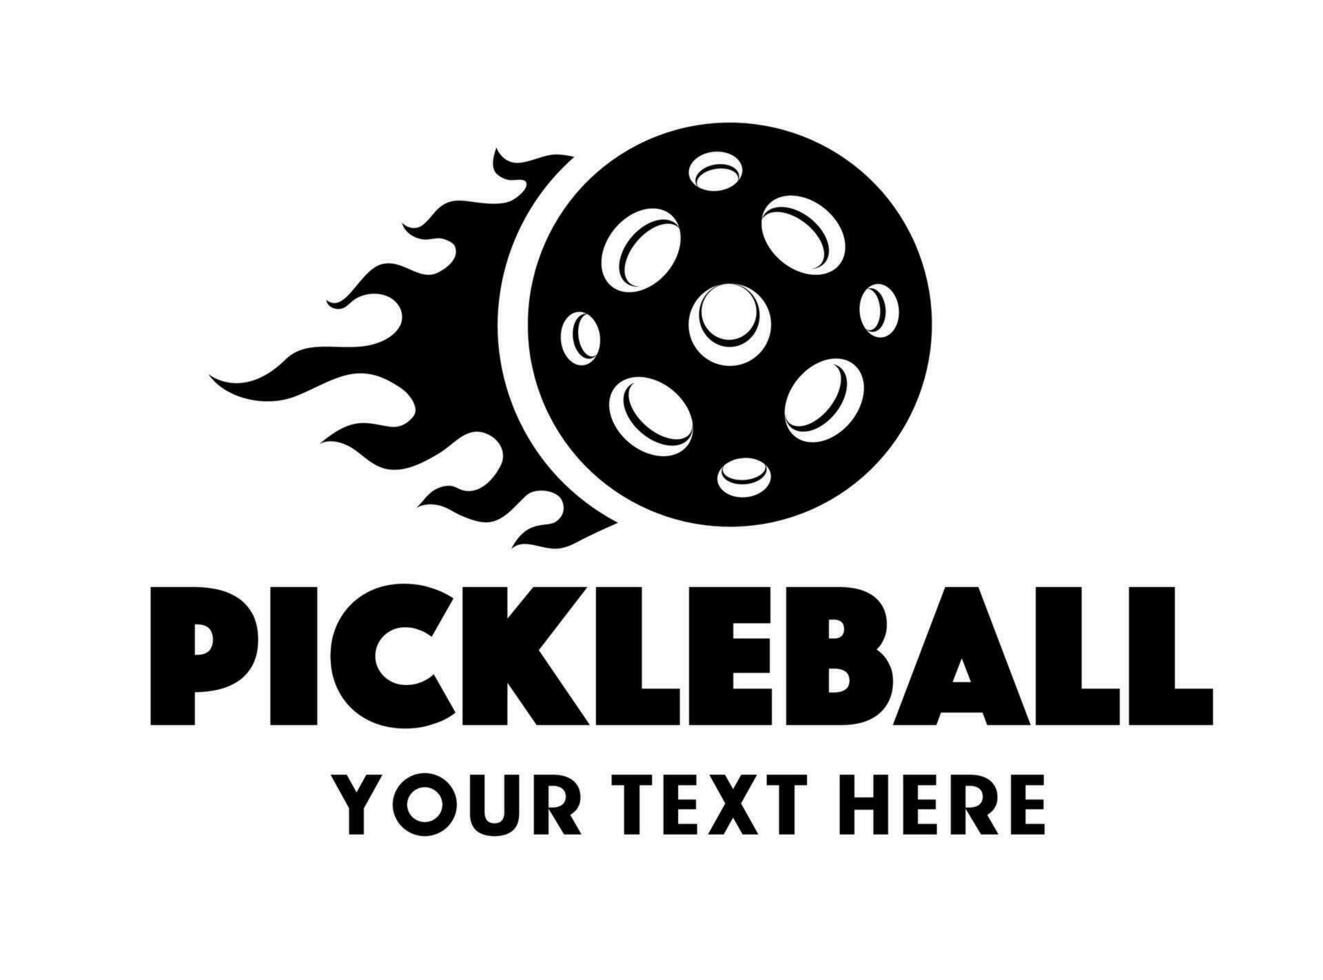 Pickleball logo vector black color